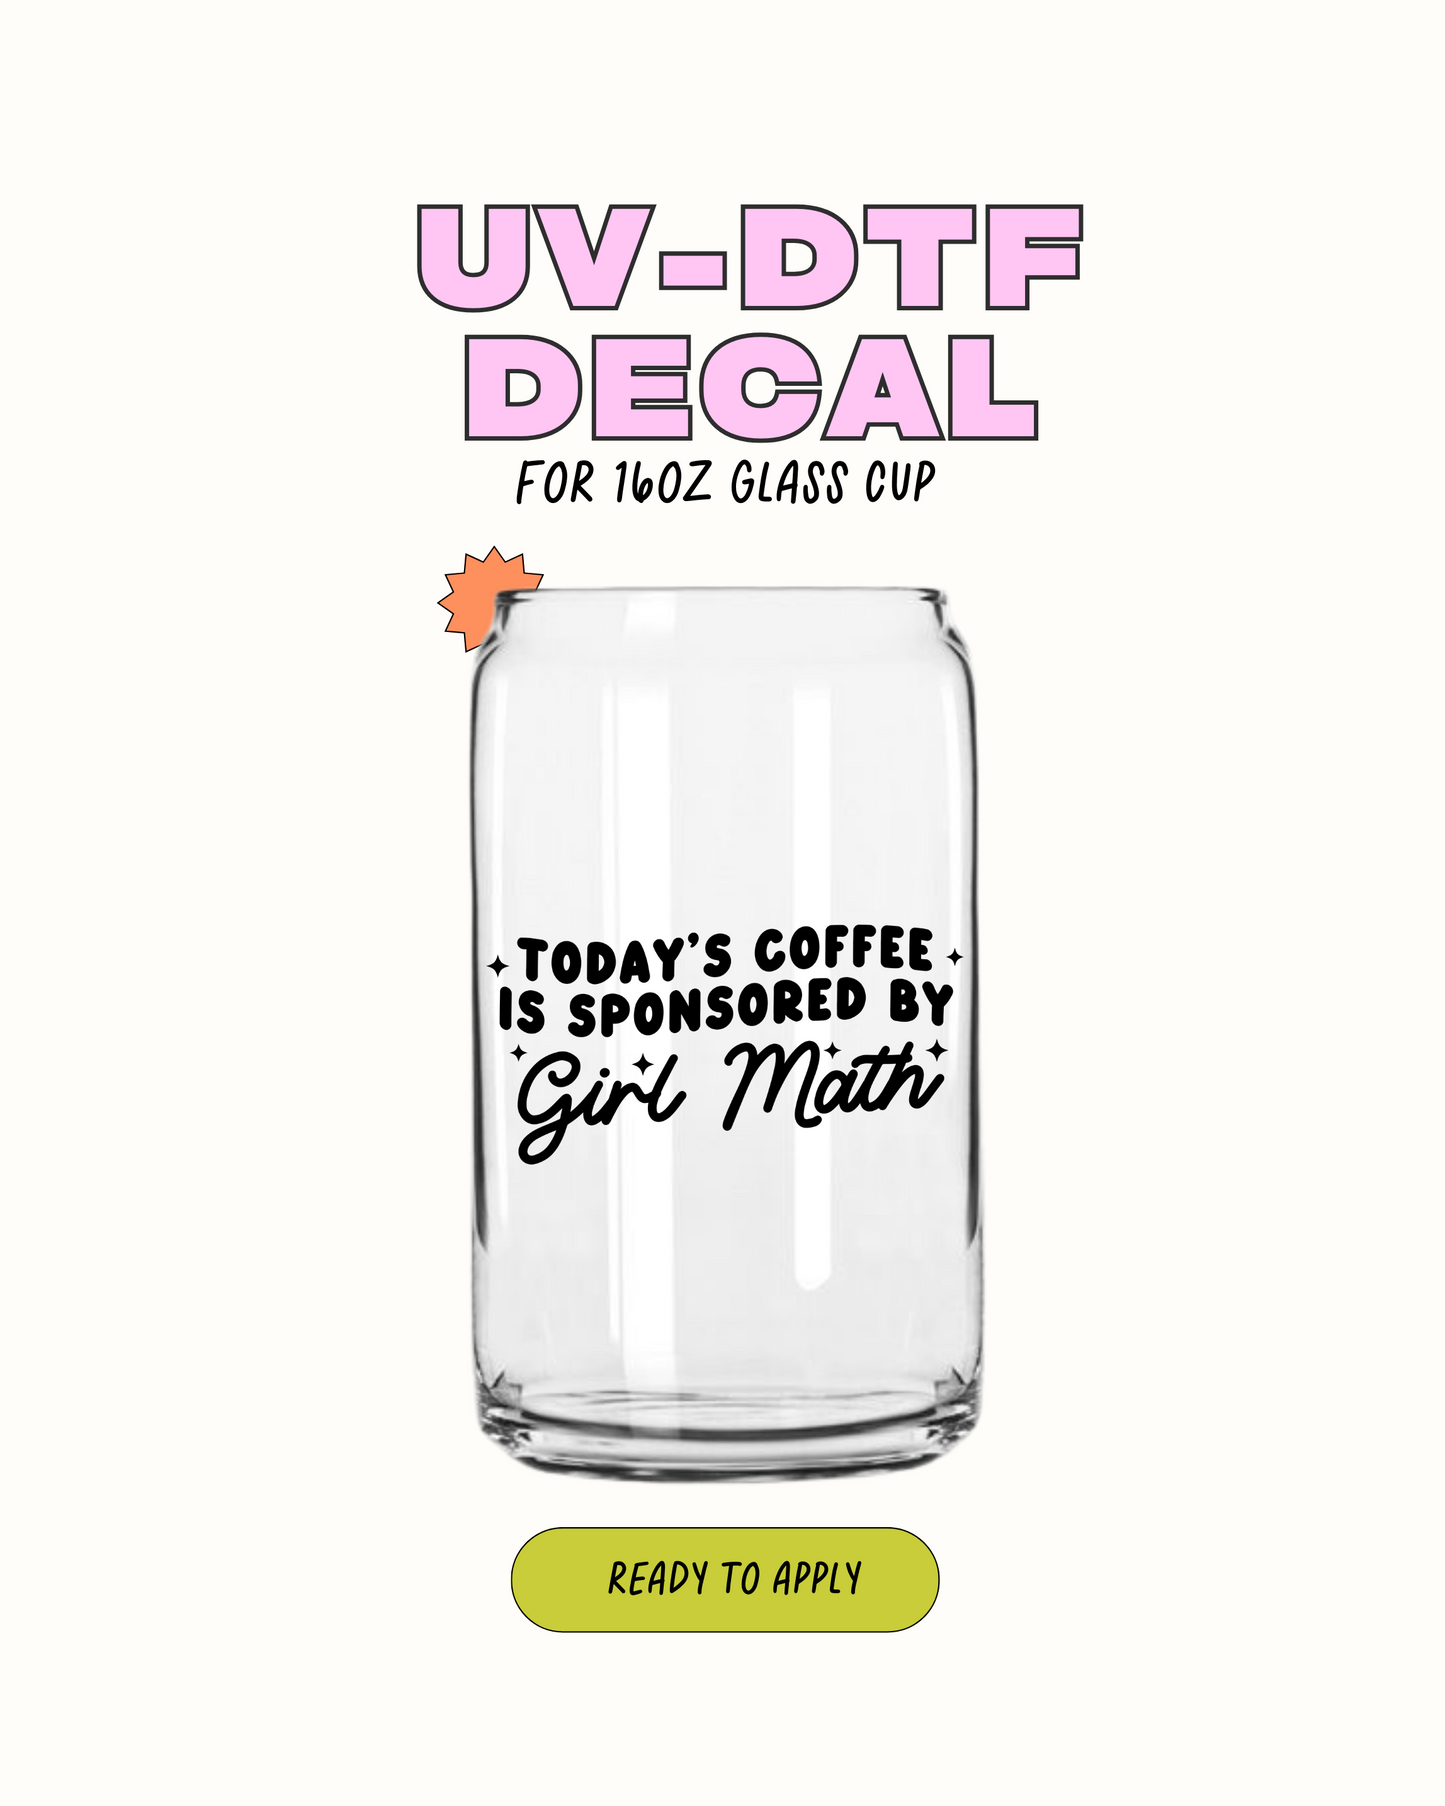 Sponsored by Girls math - UVDTF